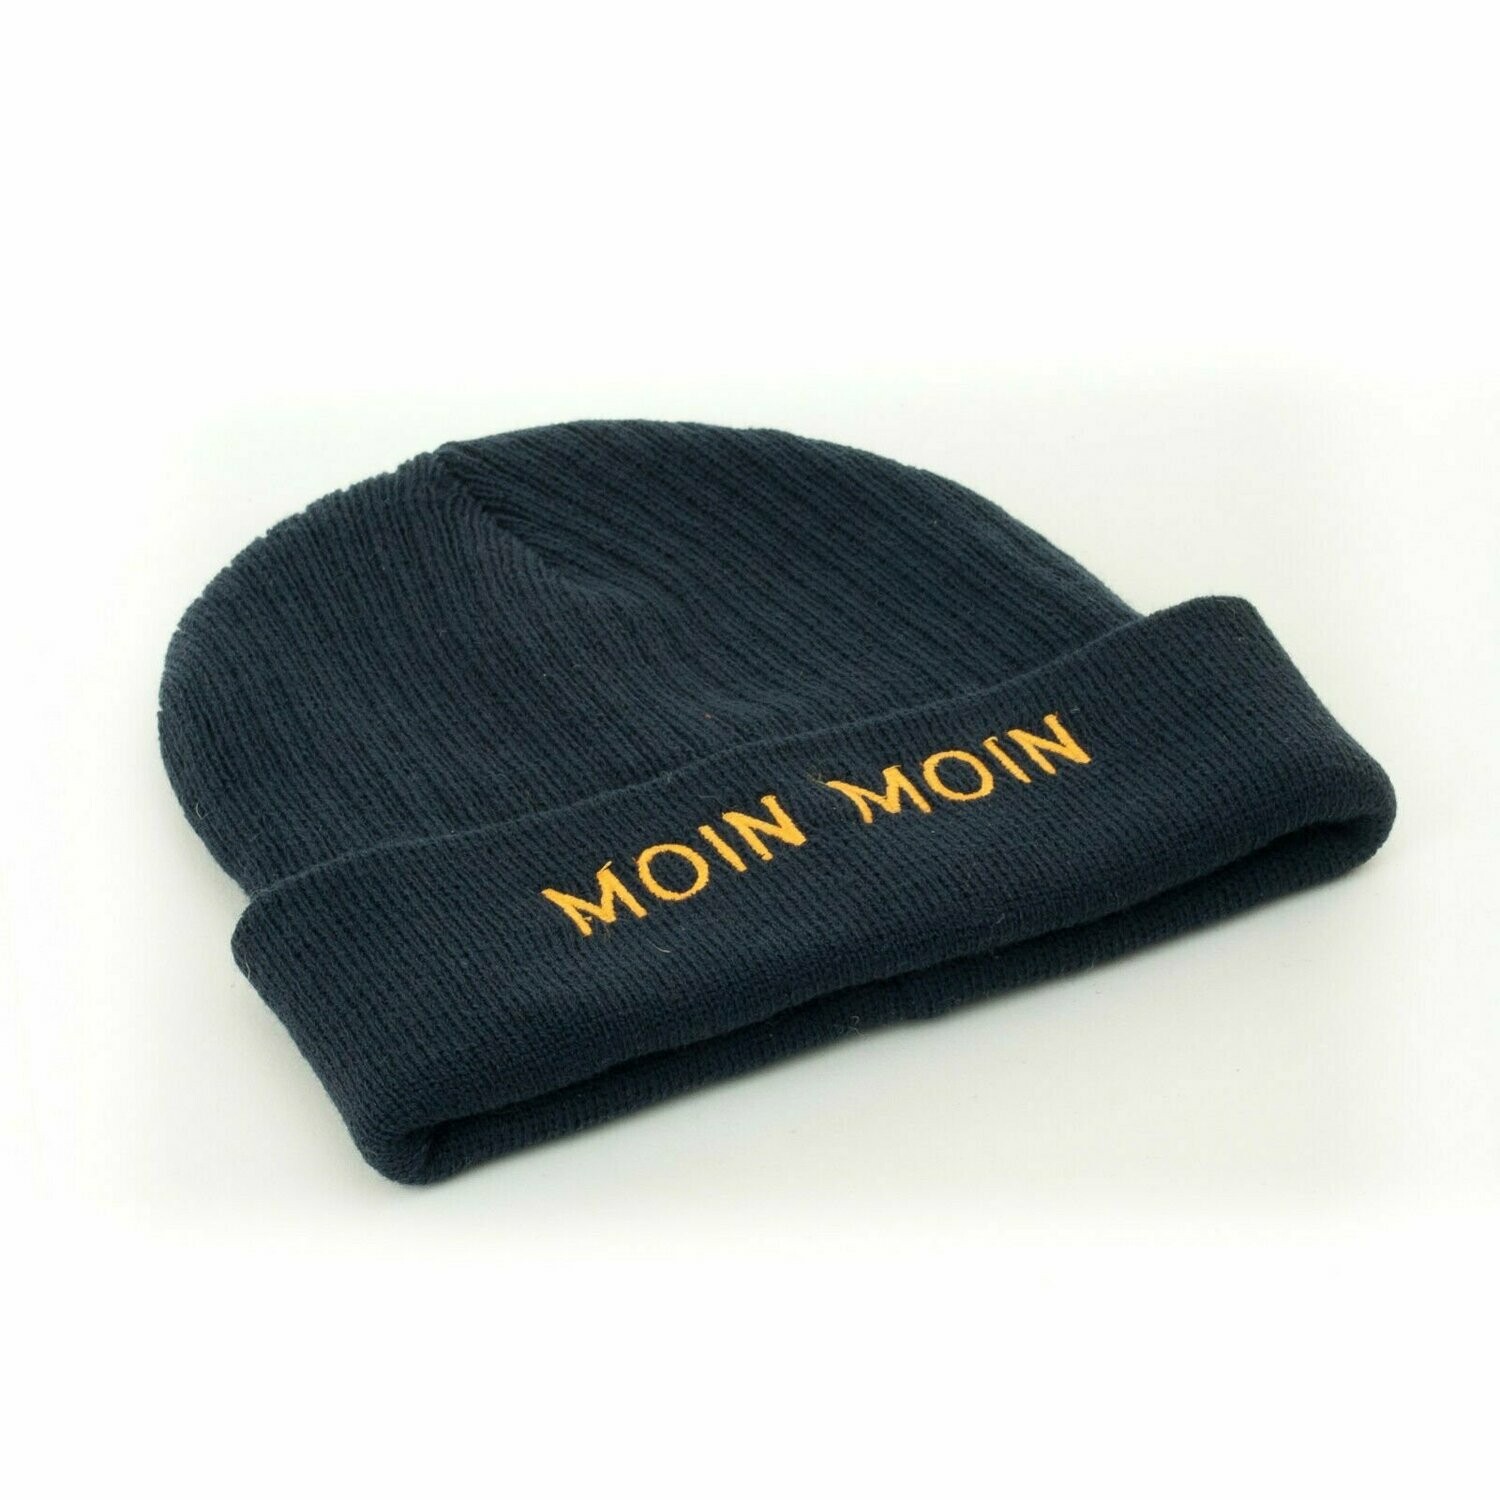 Nordische Mütze "Moin Moin" dunkel blau mit gestickten, goldenen Schriftzug.